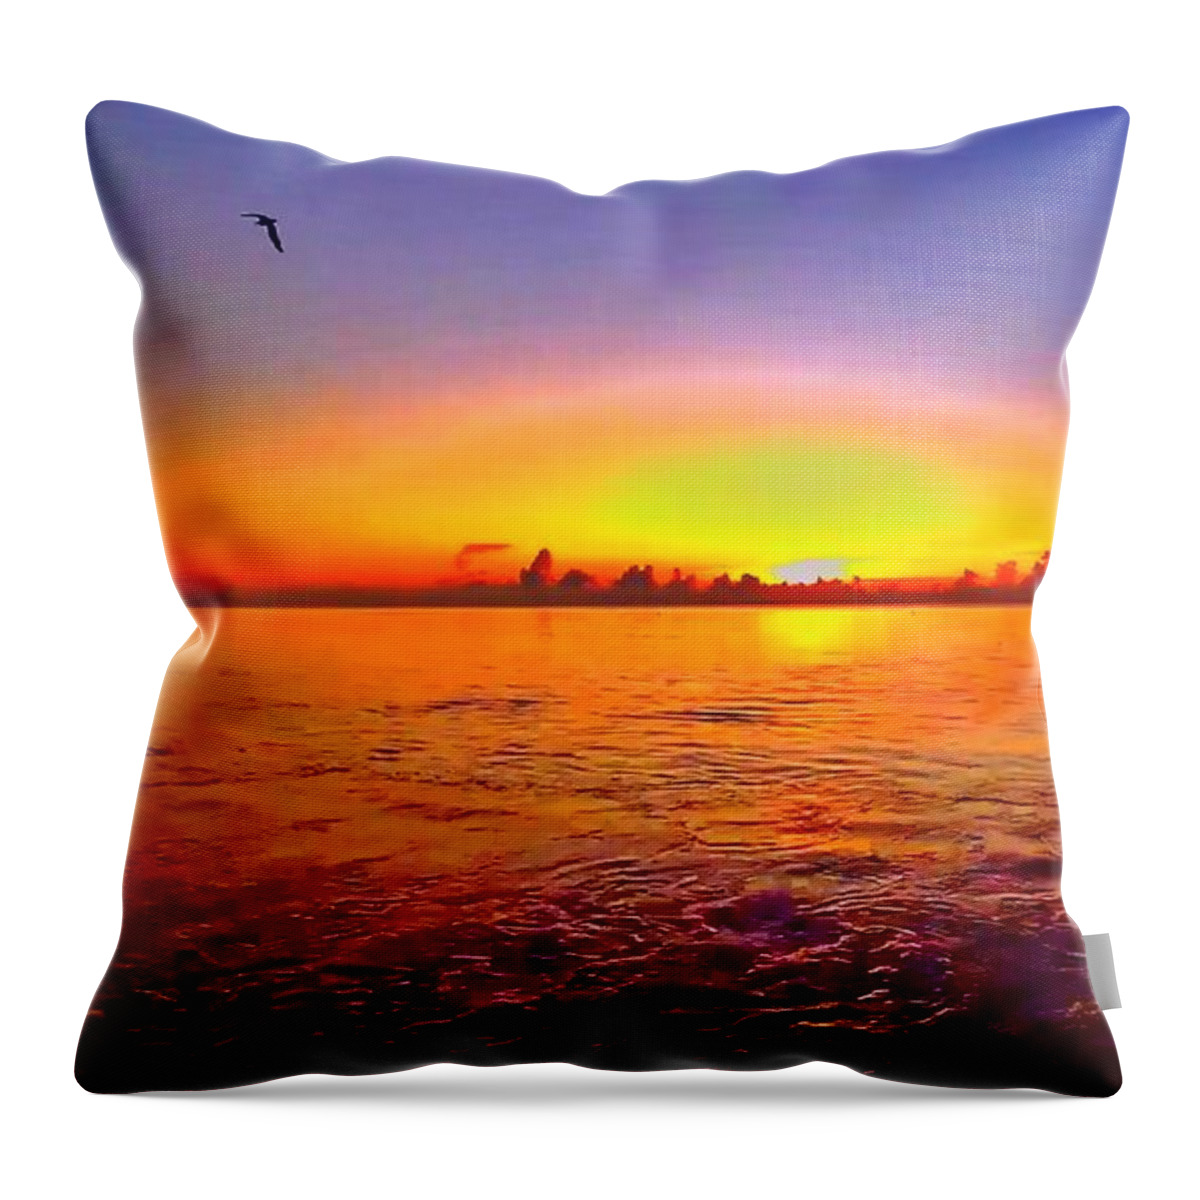 Sunrise Throw Pillow featuring the photograph Sunrise Beach 450 by Rip Read